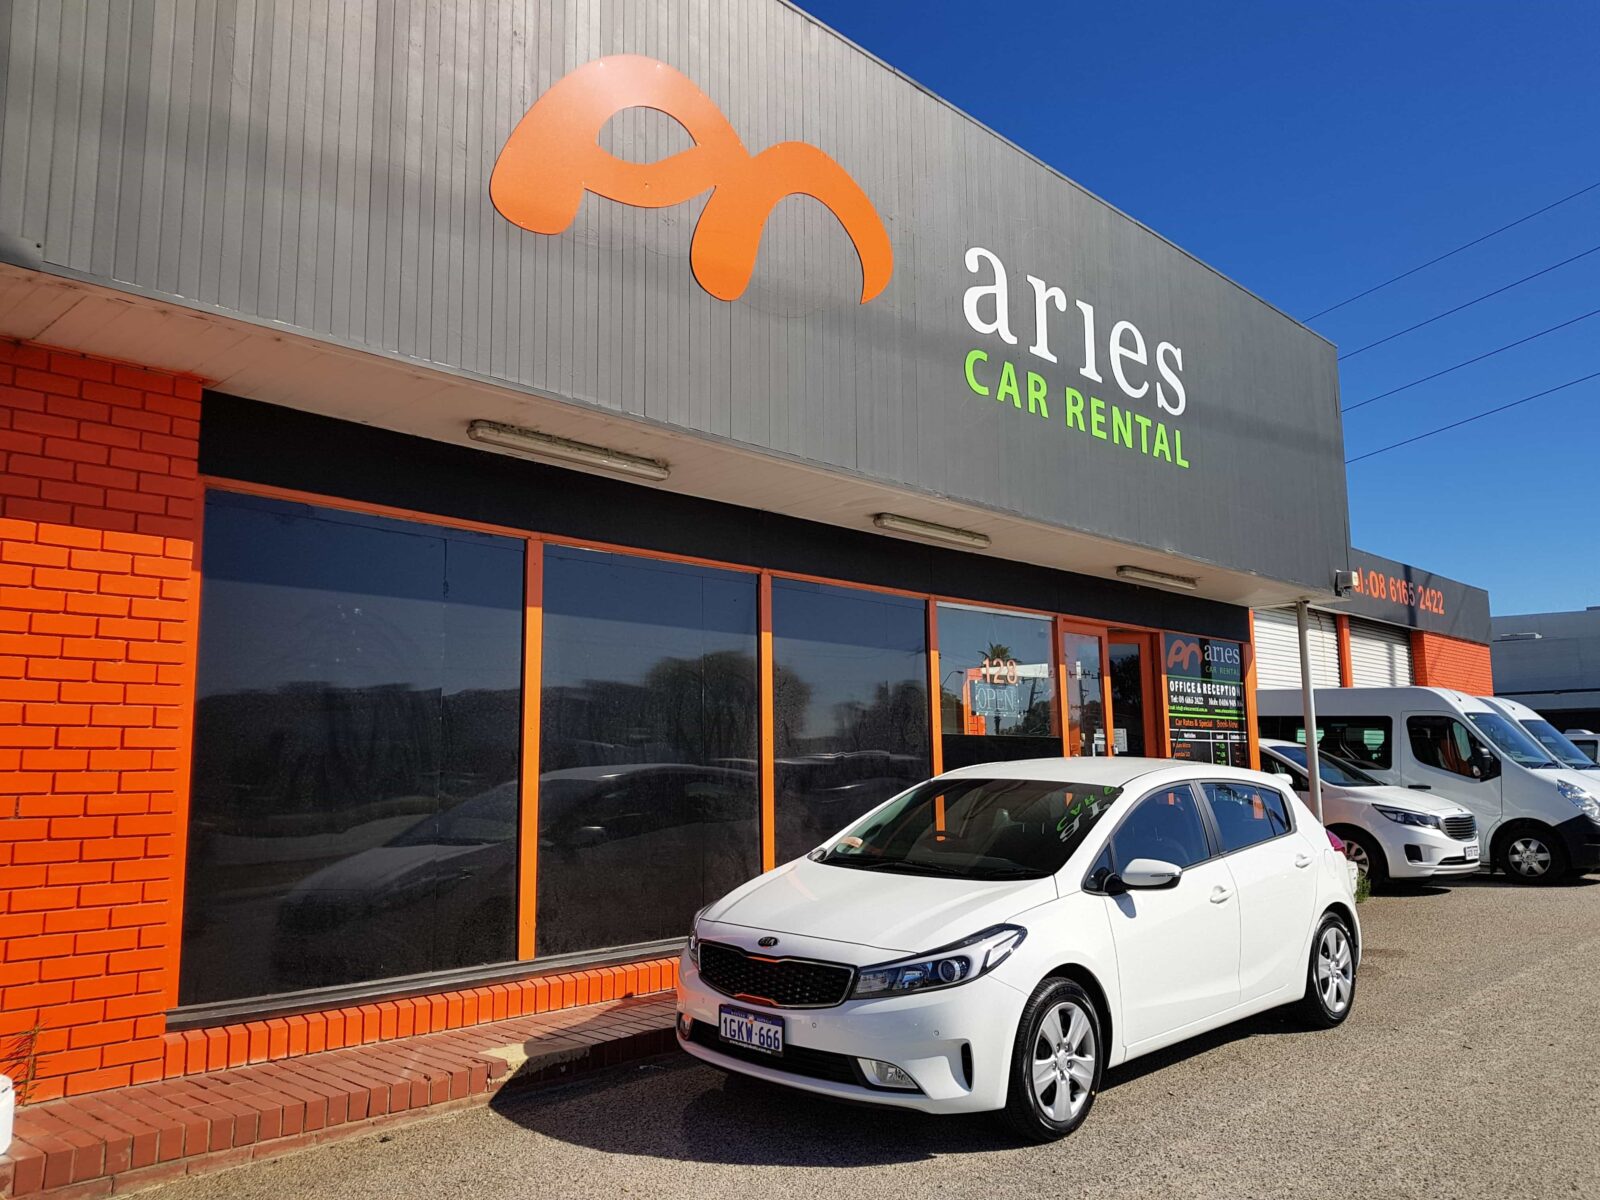 Aries Car Rental, East Perth, Western Australia